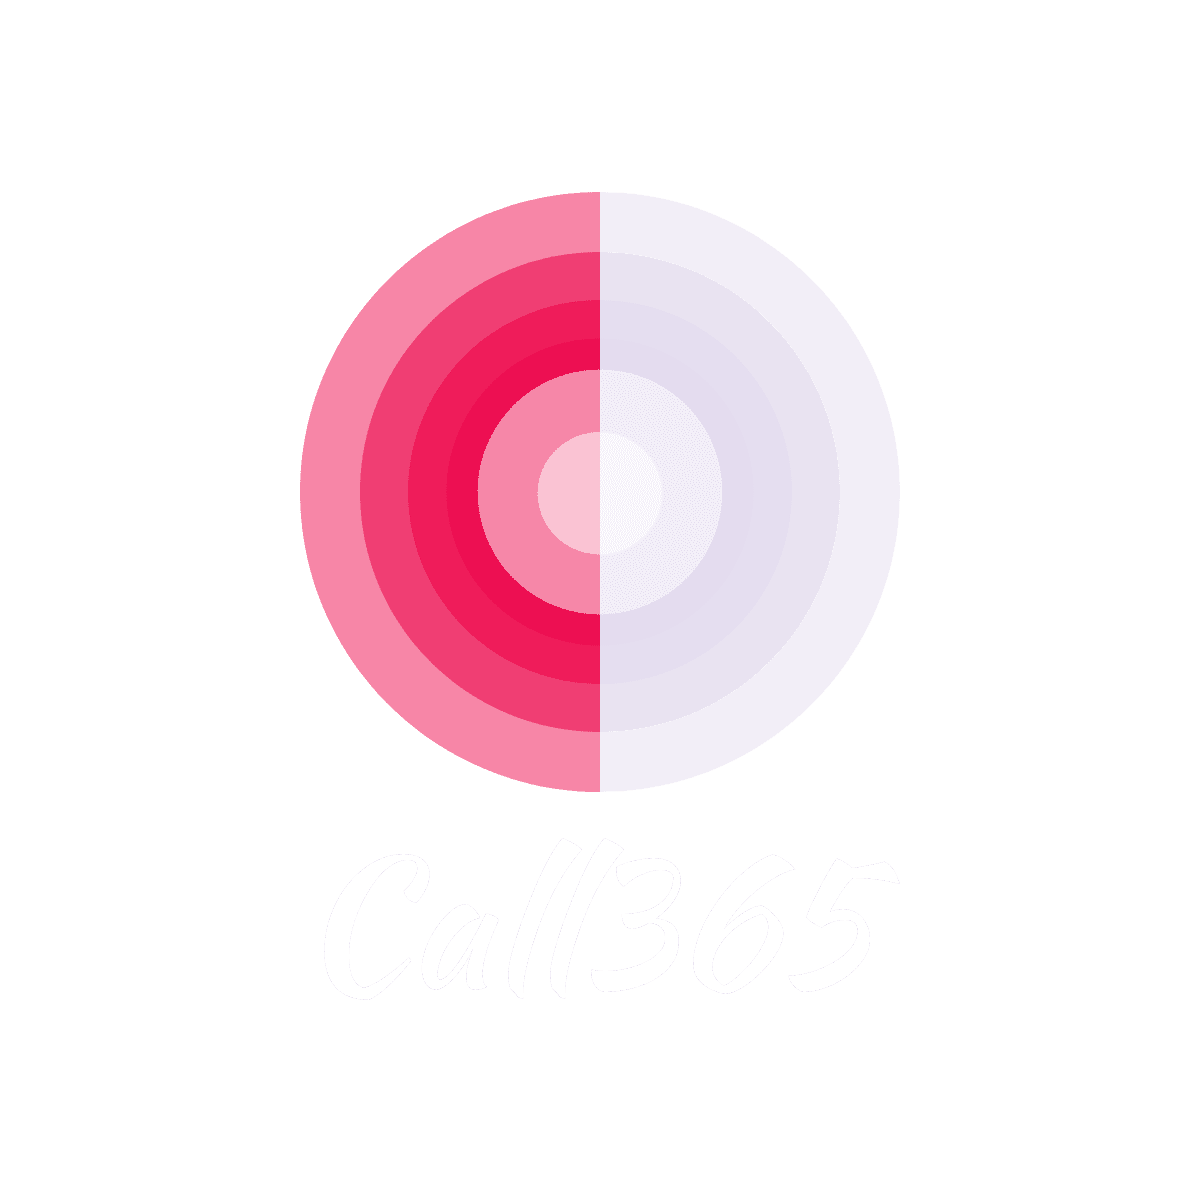 Call365|Husseine🤍